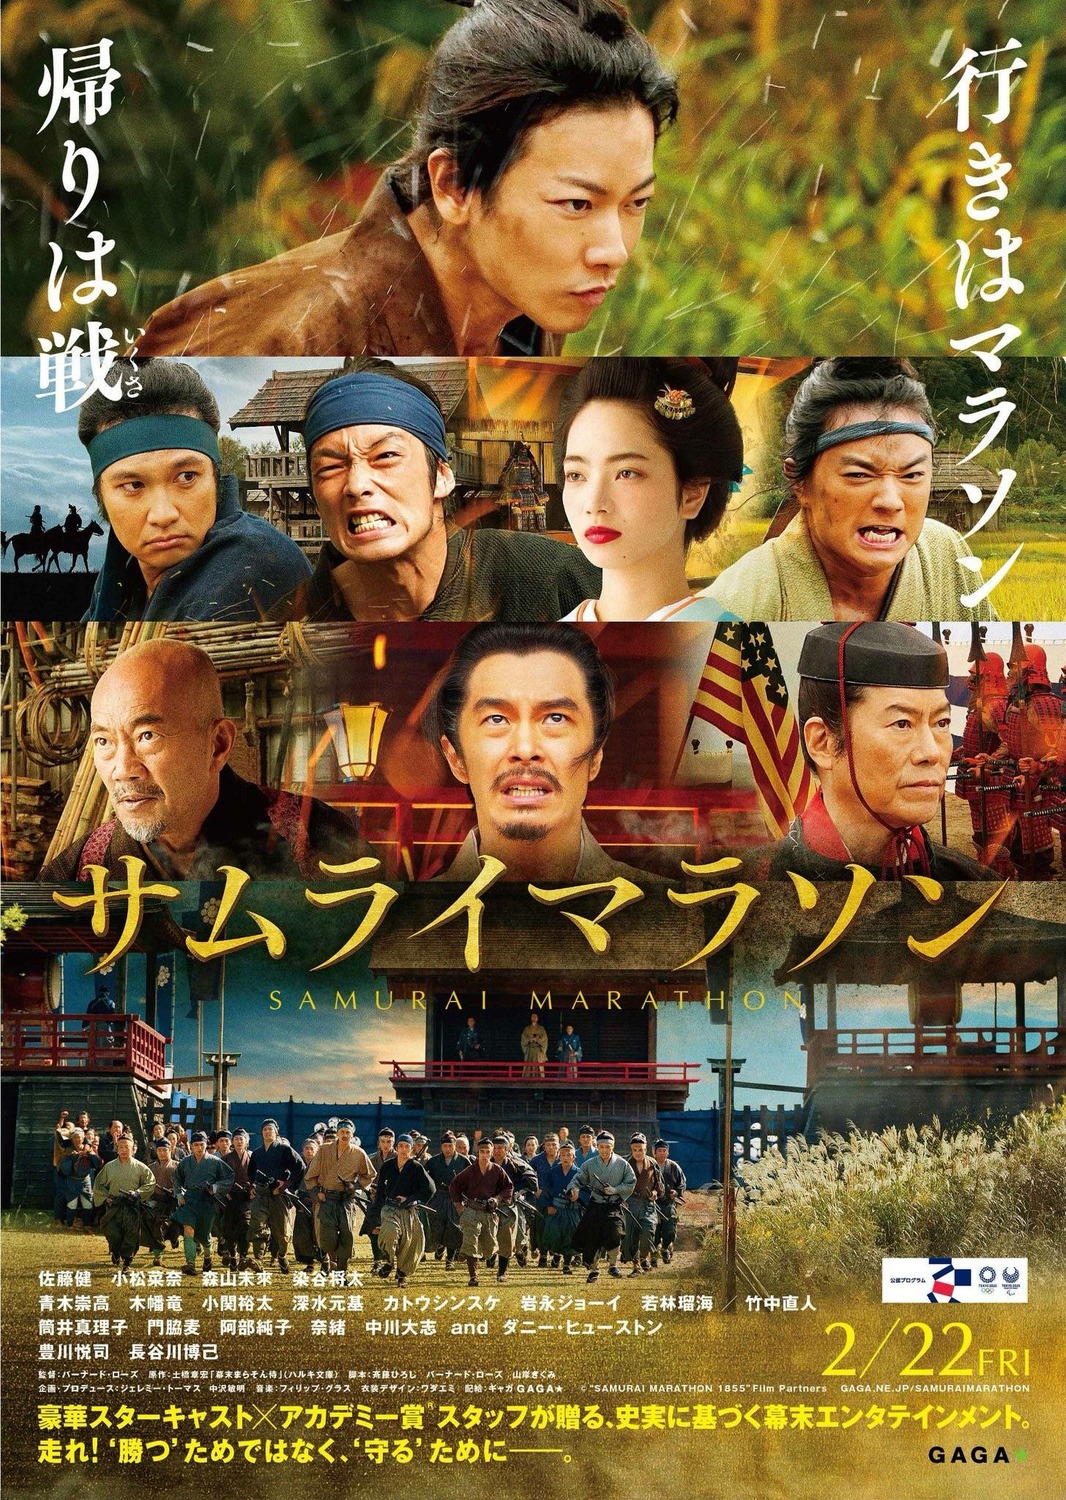 Extra Large Movie Poster Image for Samurai marason (#1 of 2)